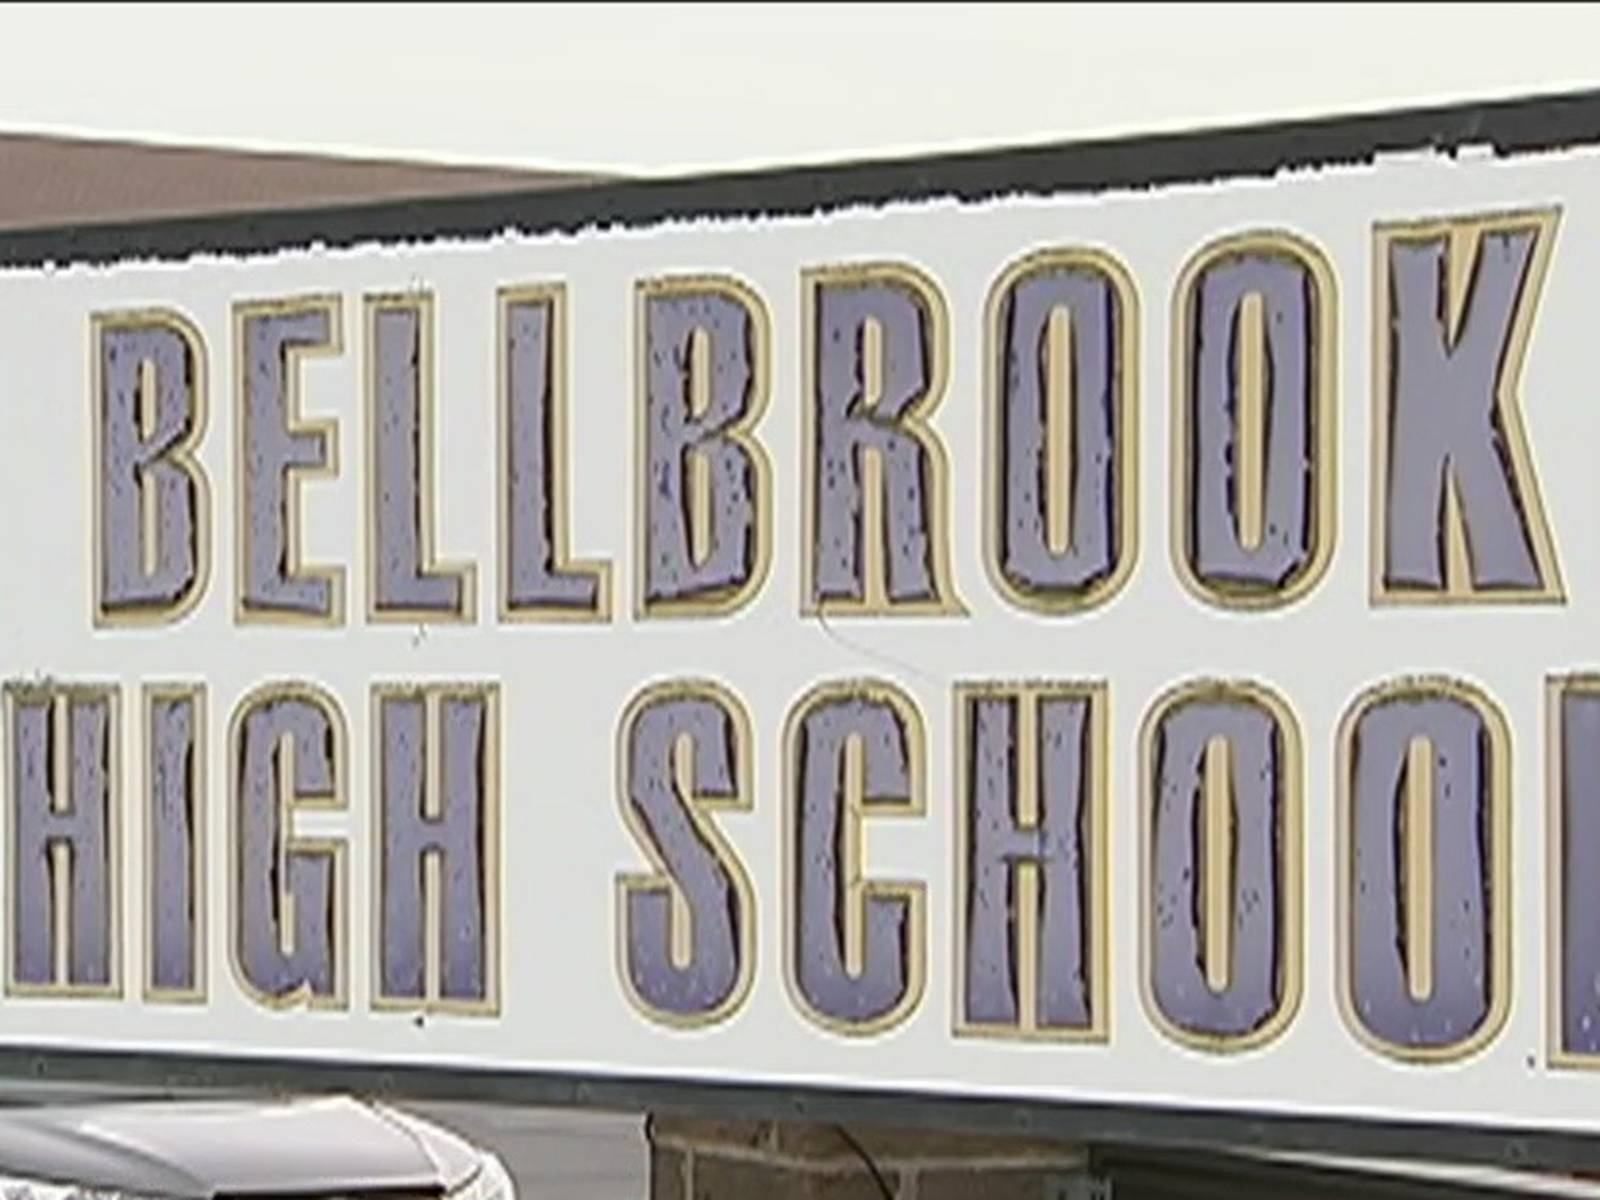 Bellbrook Sugarcreek Schools appoints new board member Tuesday night